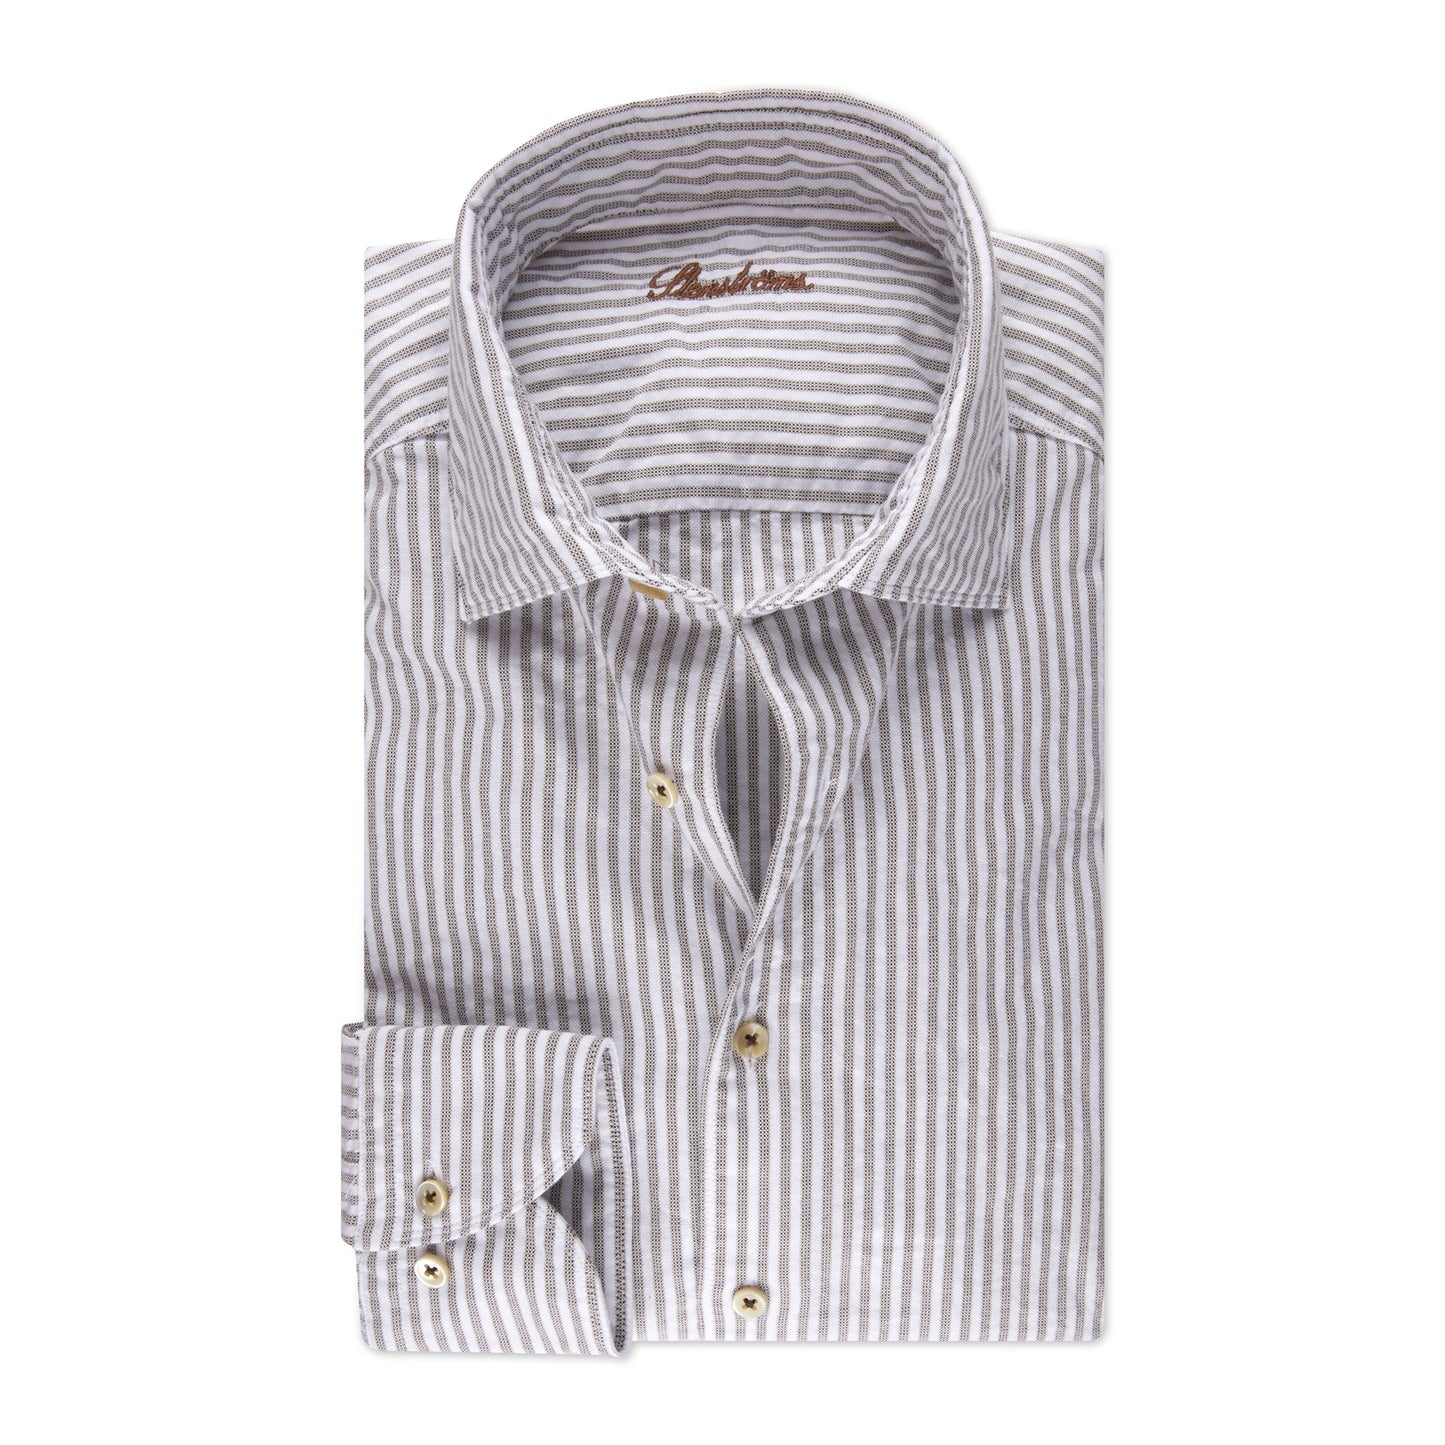 Stenstroms Fitted White w/ Tan Stripe Shirt 272